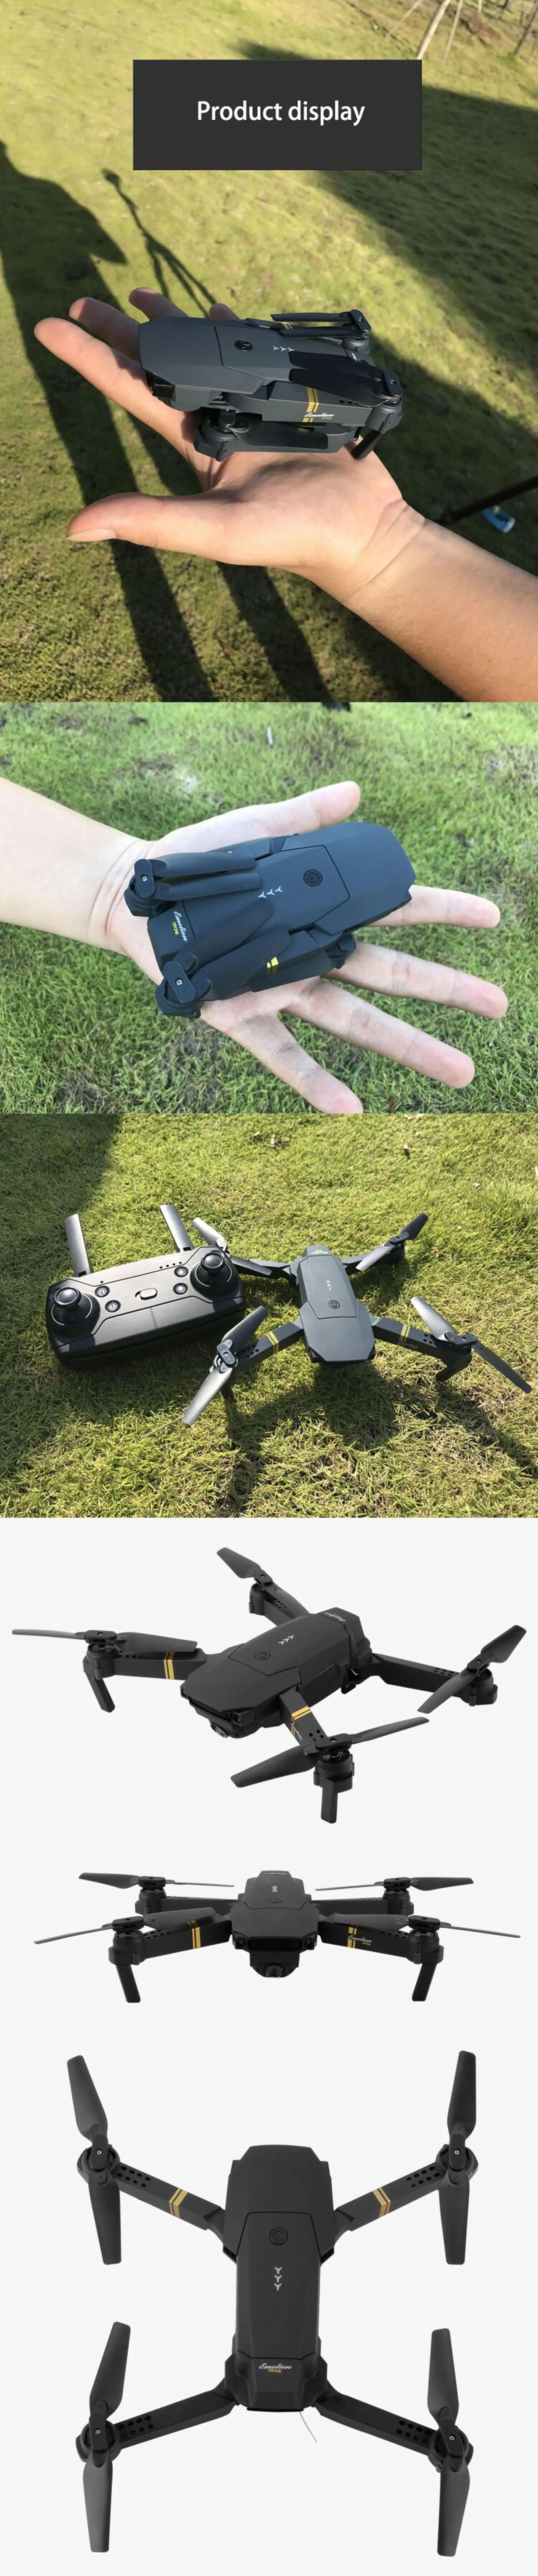 dji mavic mini jy019 drone